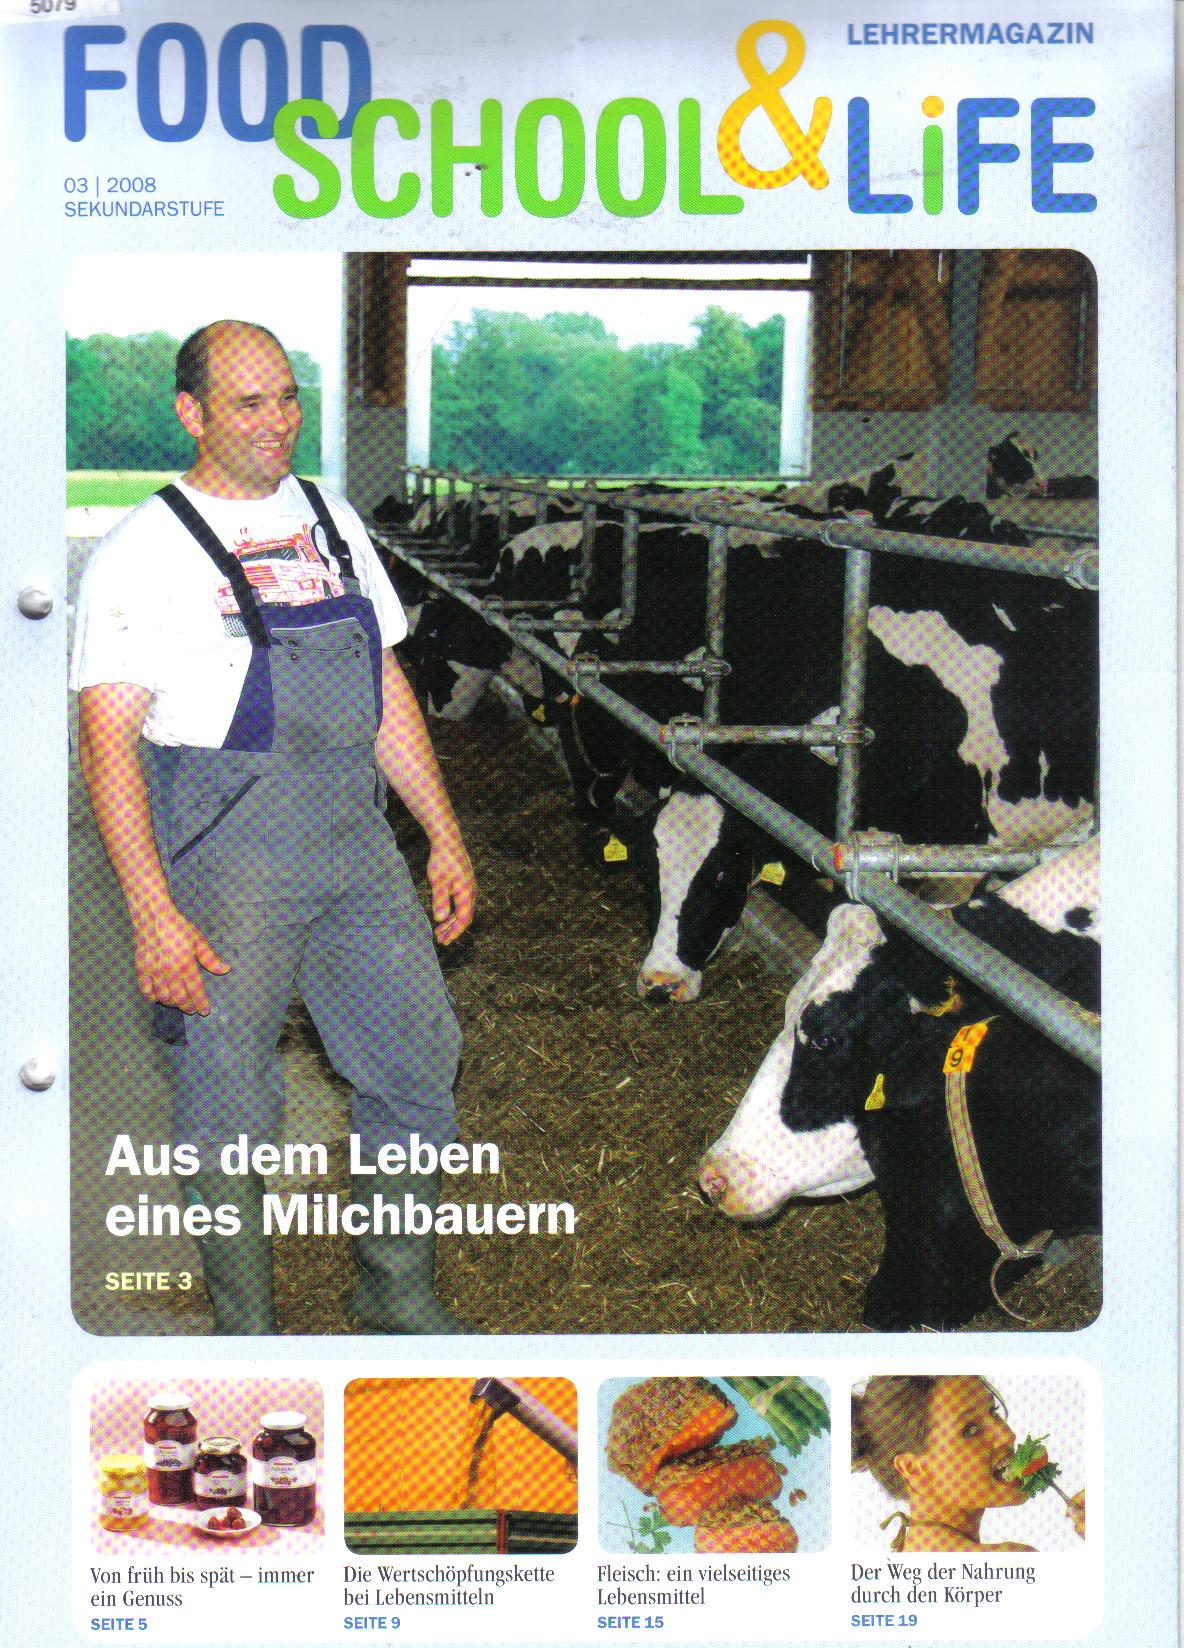 Food School & Life  Lehrermagazin .... 03/2008 Sekundarstufe